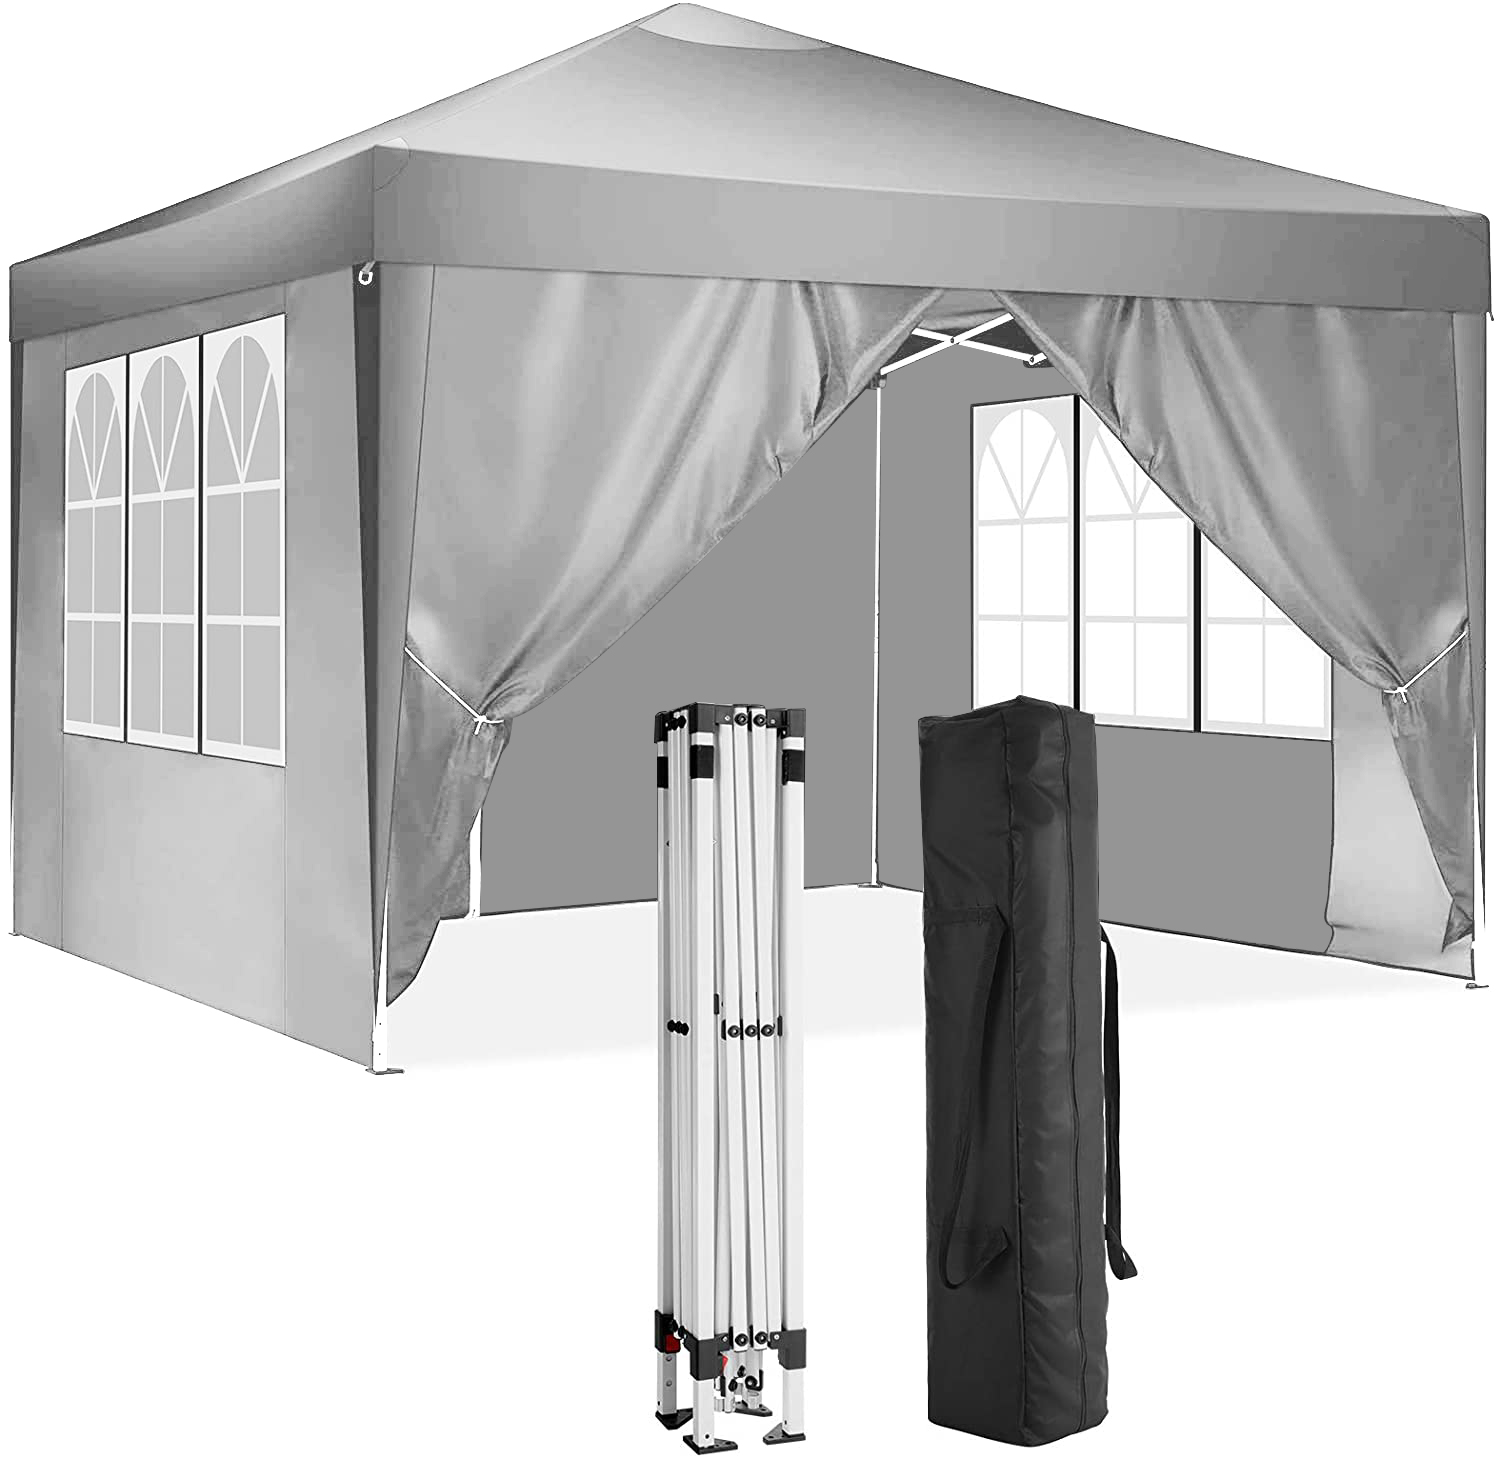 Details about   10' x 10' EZ Pop Up Canopy Tent Folding Wedding Party Tent Gazebo 4 Sidewalls 4 